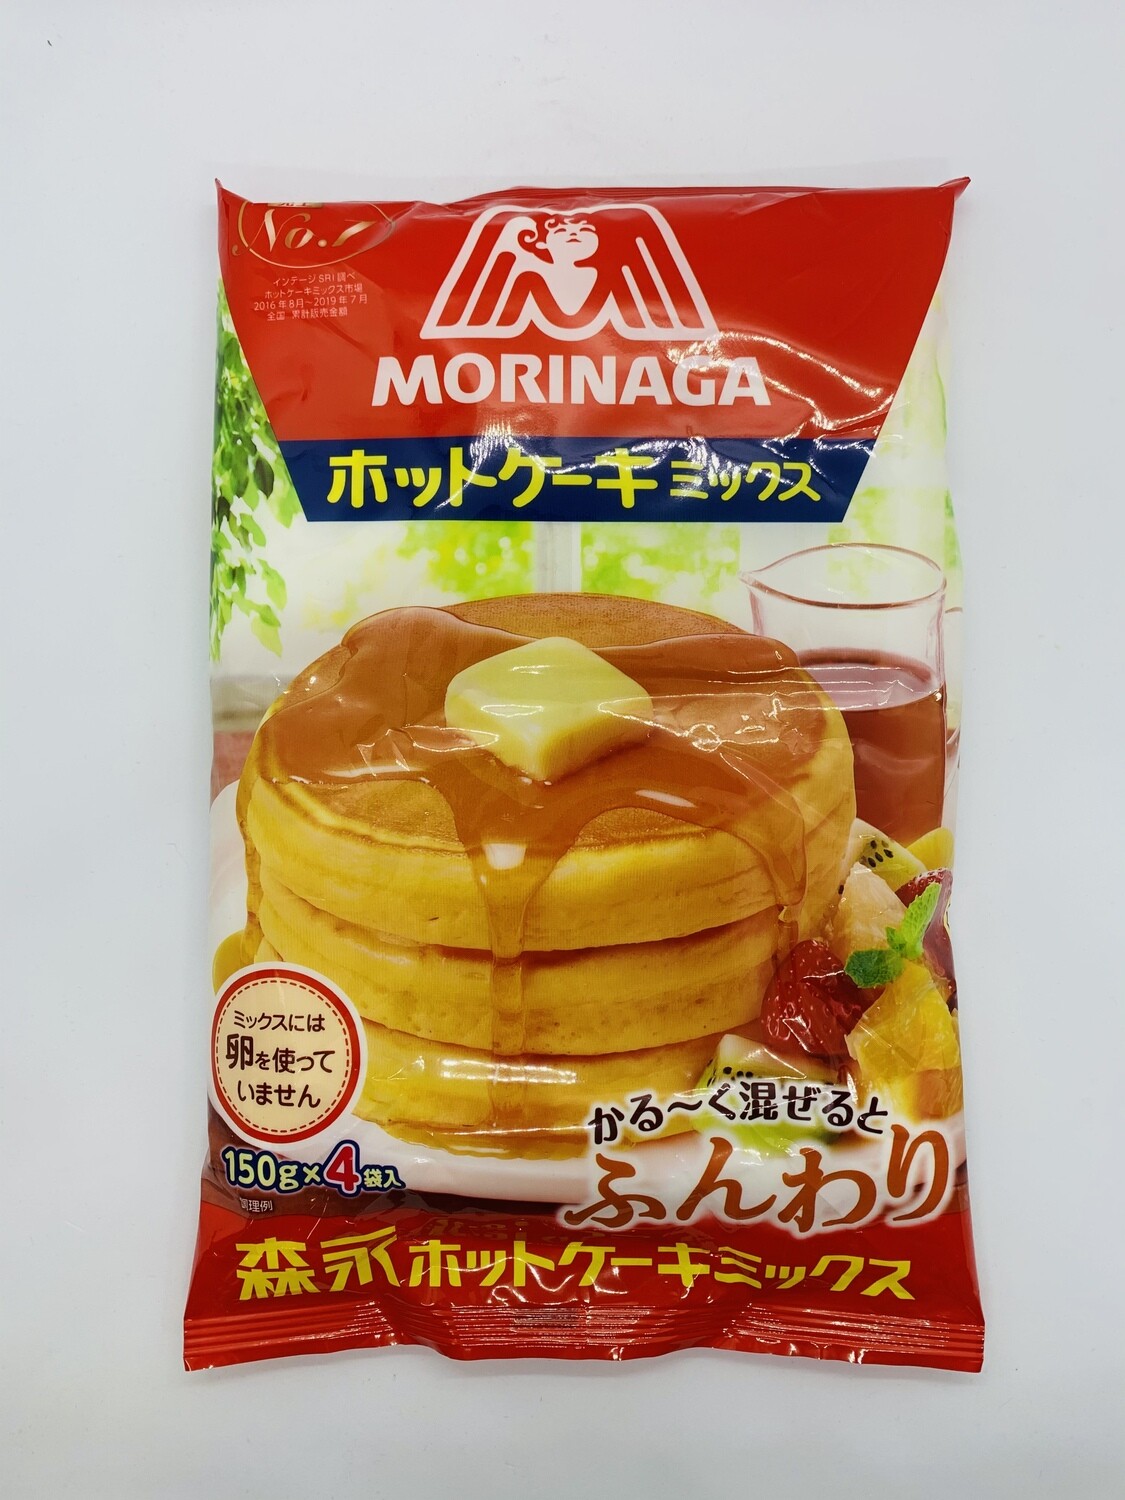 MORINAGA Hot Cake Mix